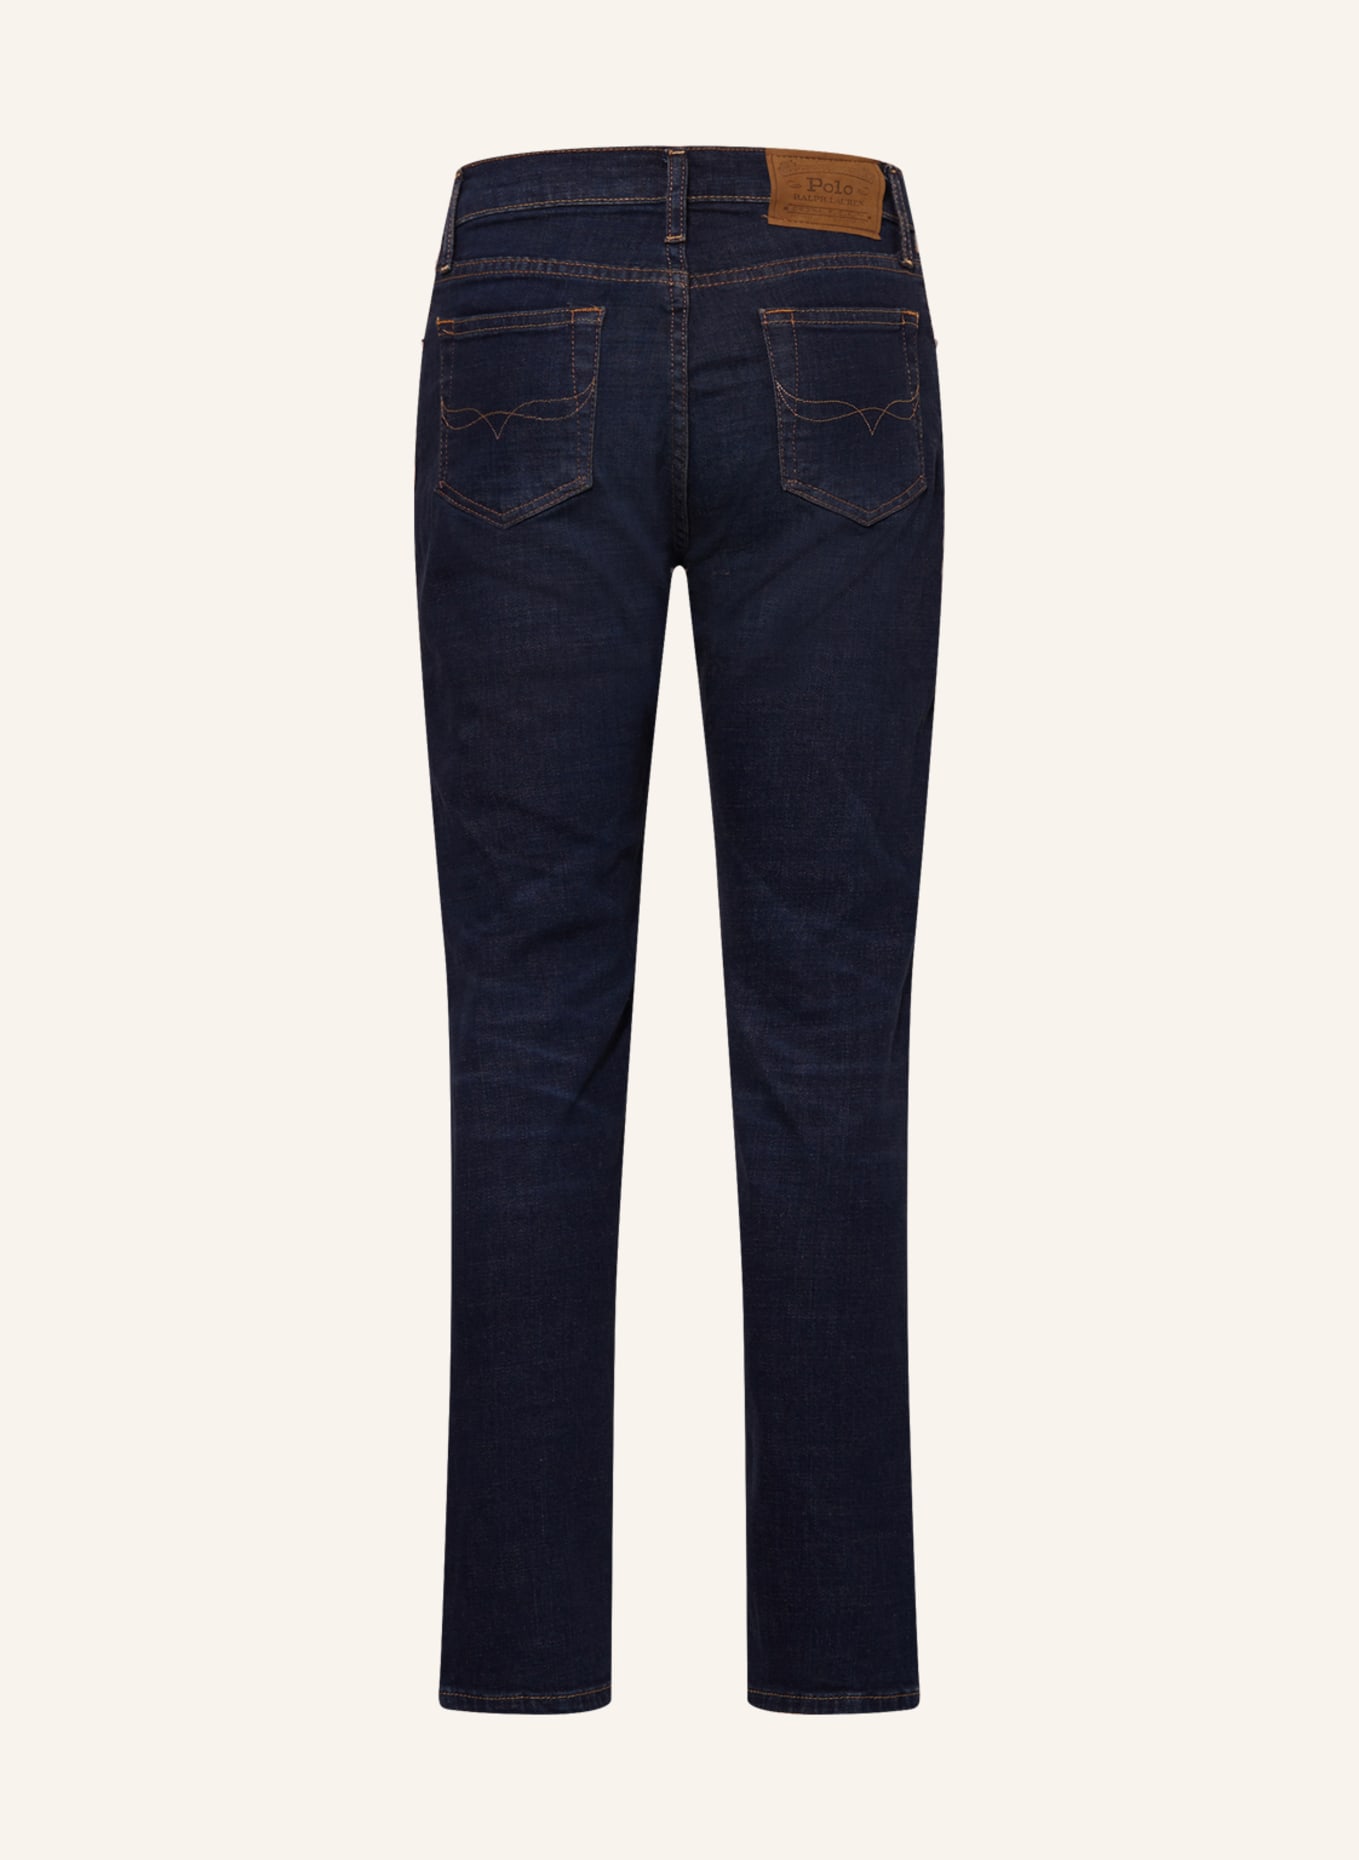 POLO RALPH LAUREN Jeans SULLIVAN Slim Fit, Farbe: 001 ADAMS WASH (Bild 2)